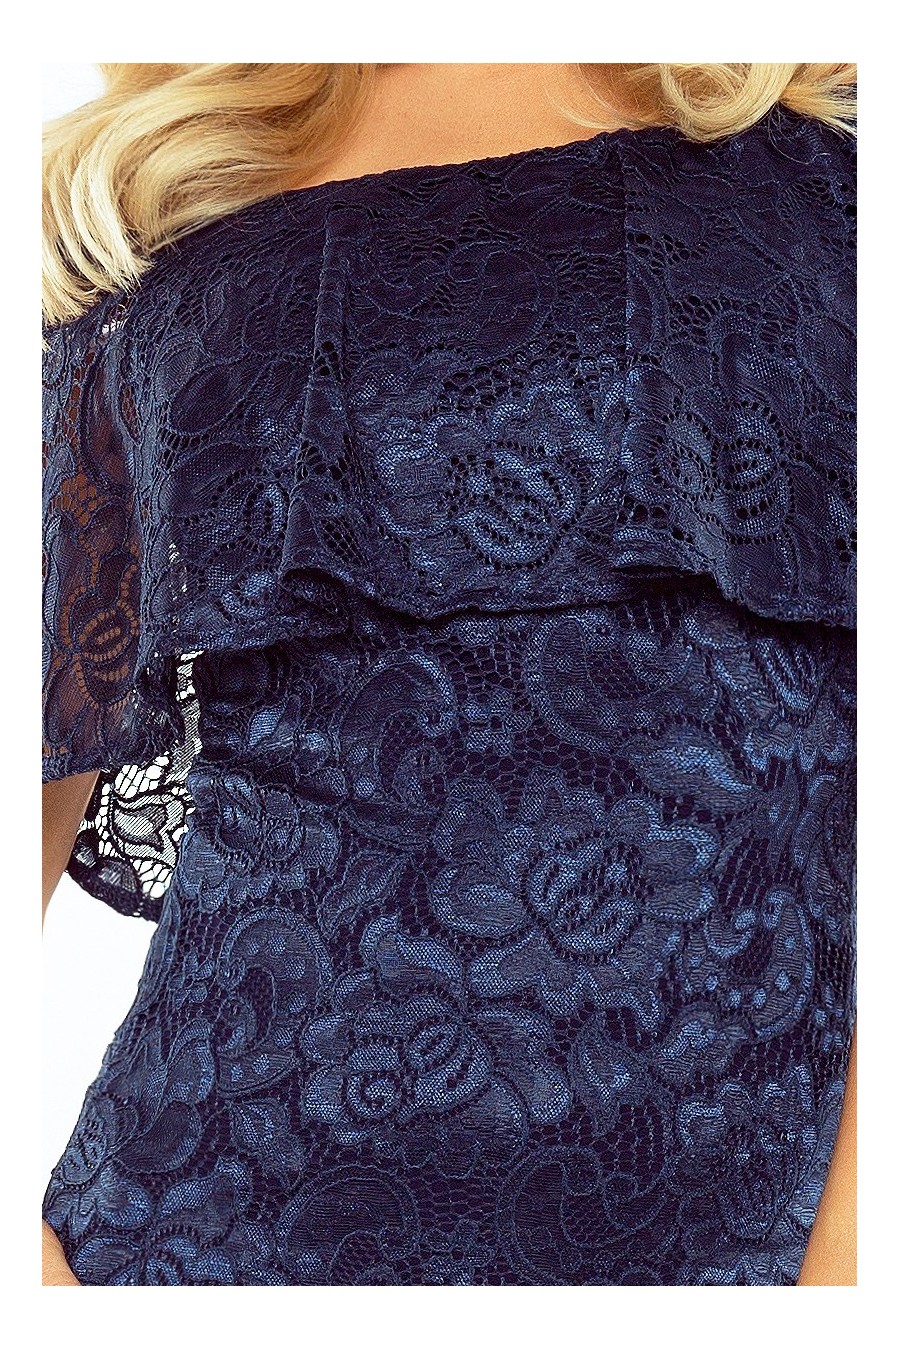 MM 013-4 Šaty s límcem - krajka - tmavé modré